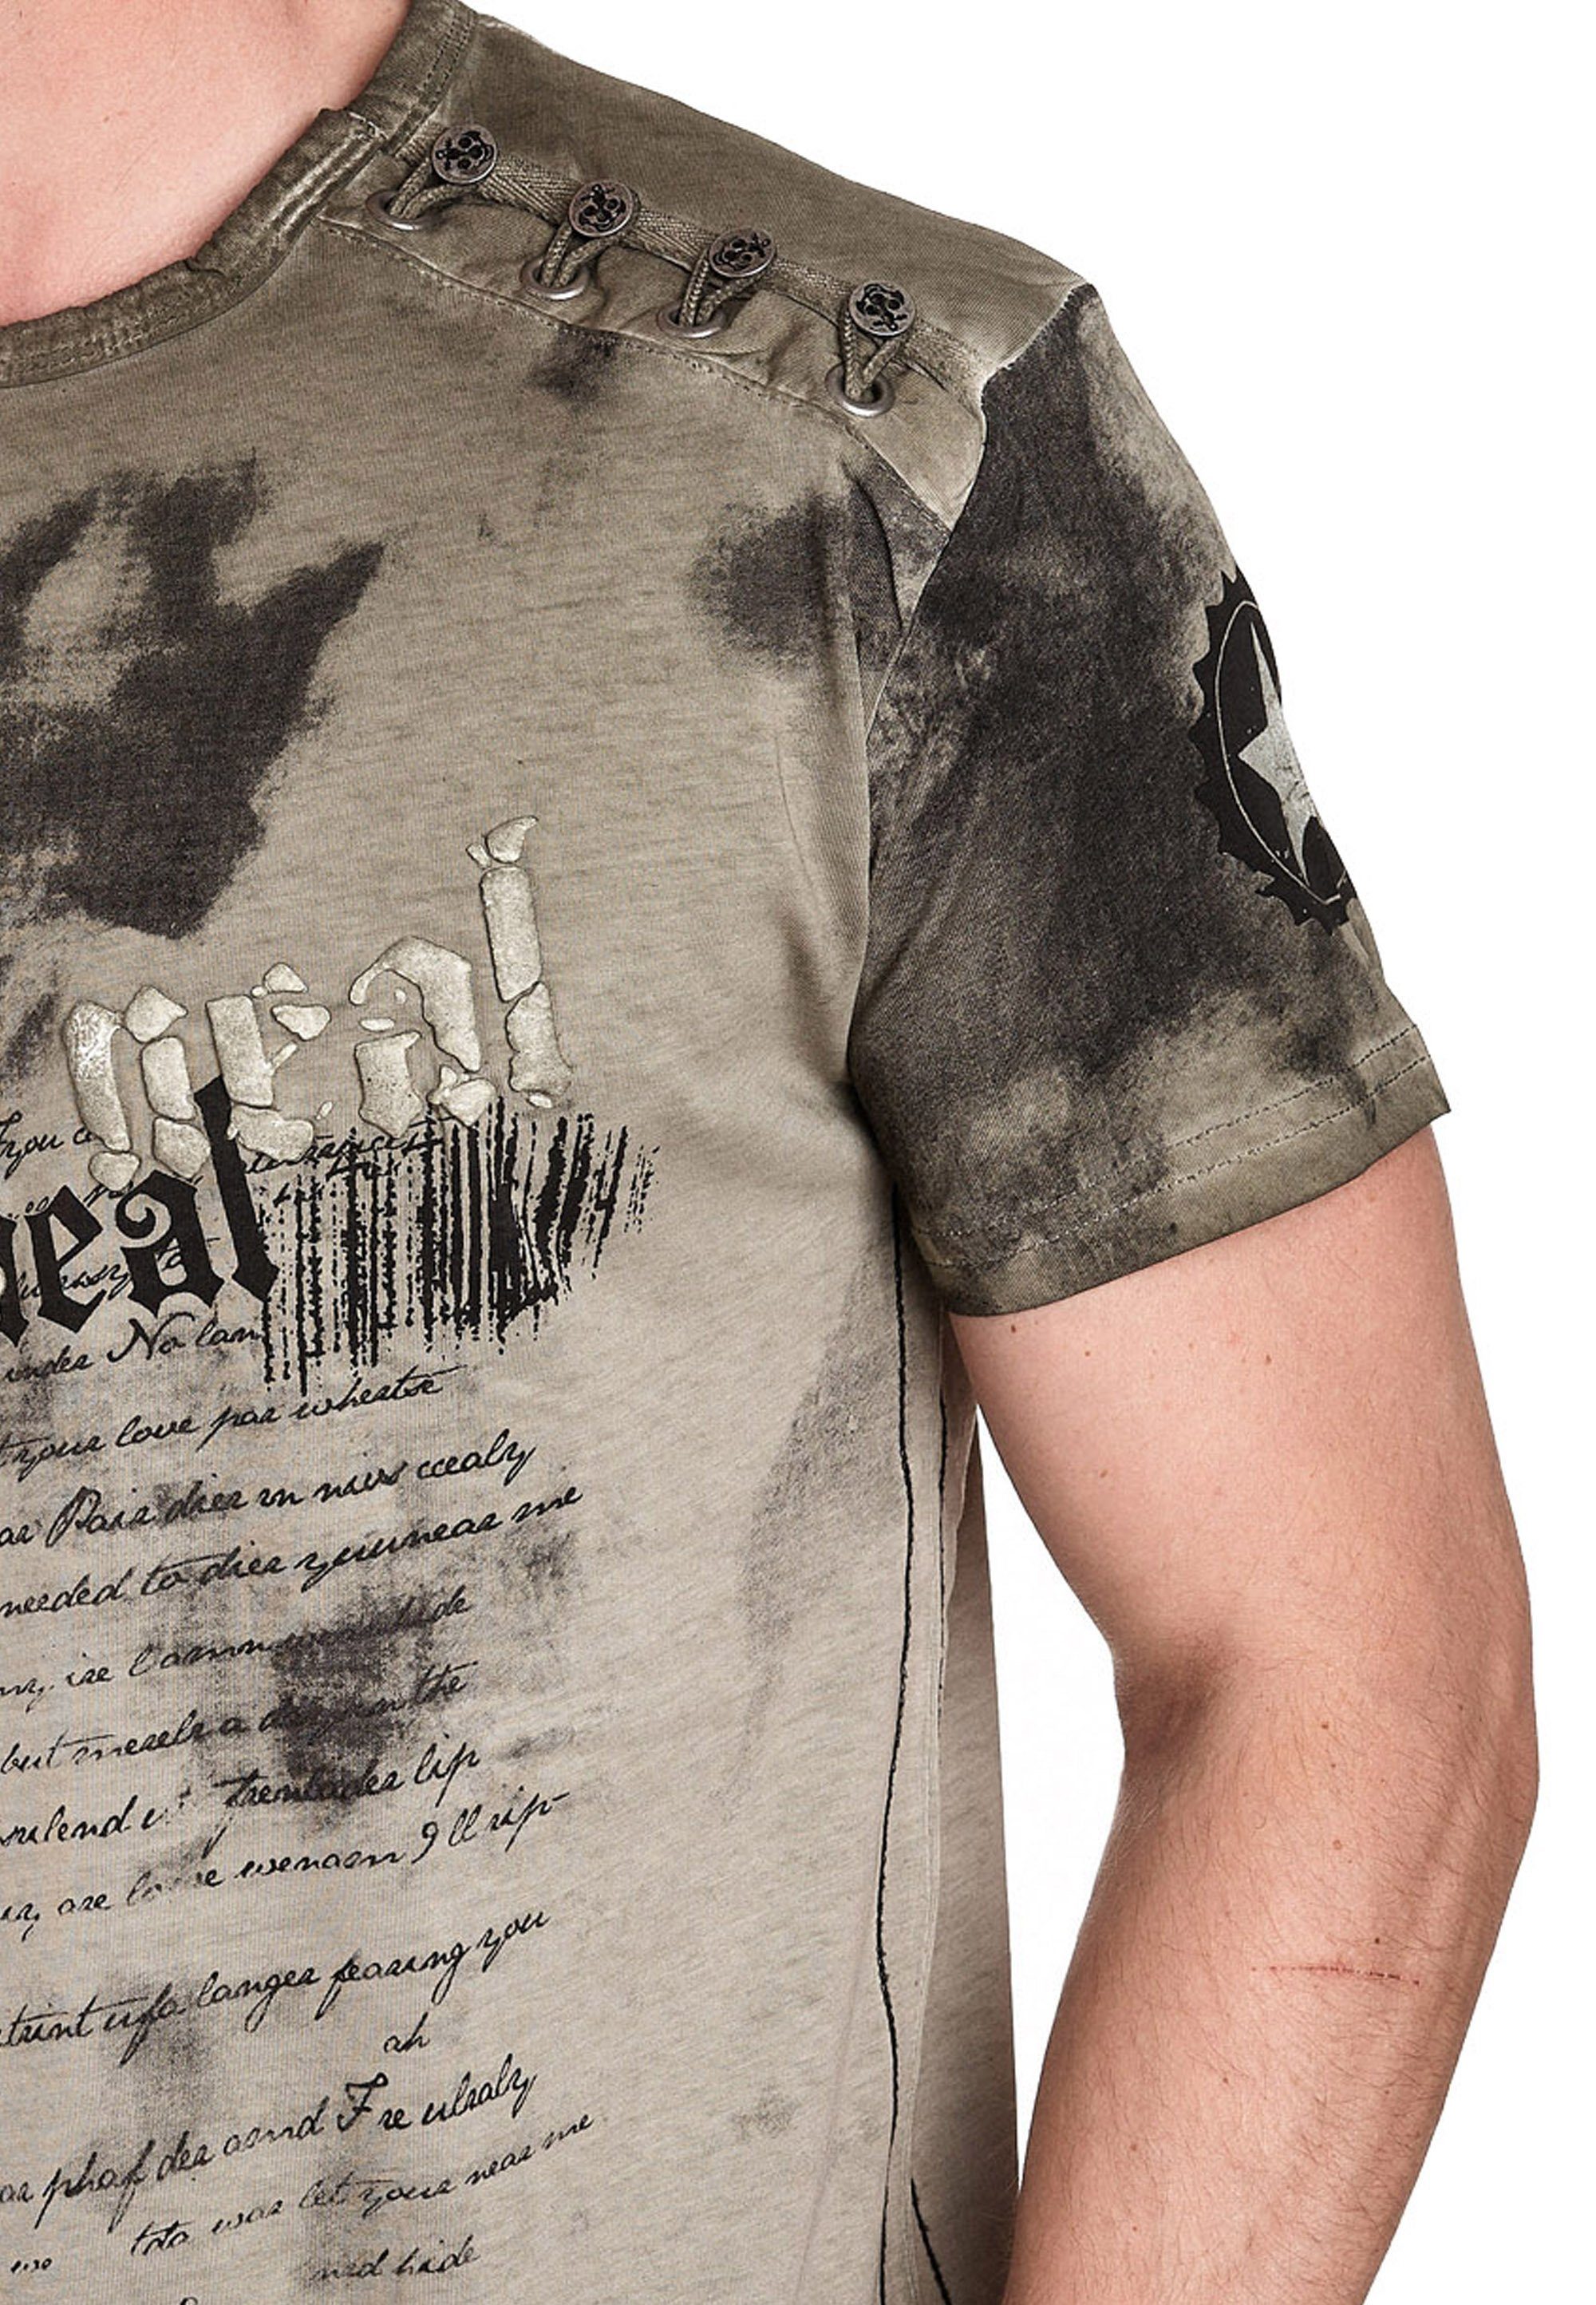 Rusty Neal T-Shirt in Batik-Design tollem khaki